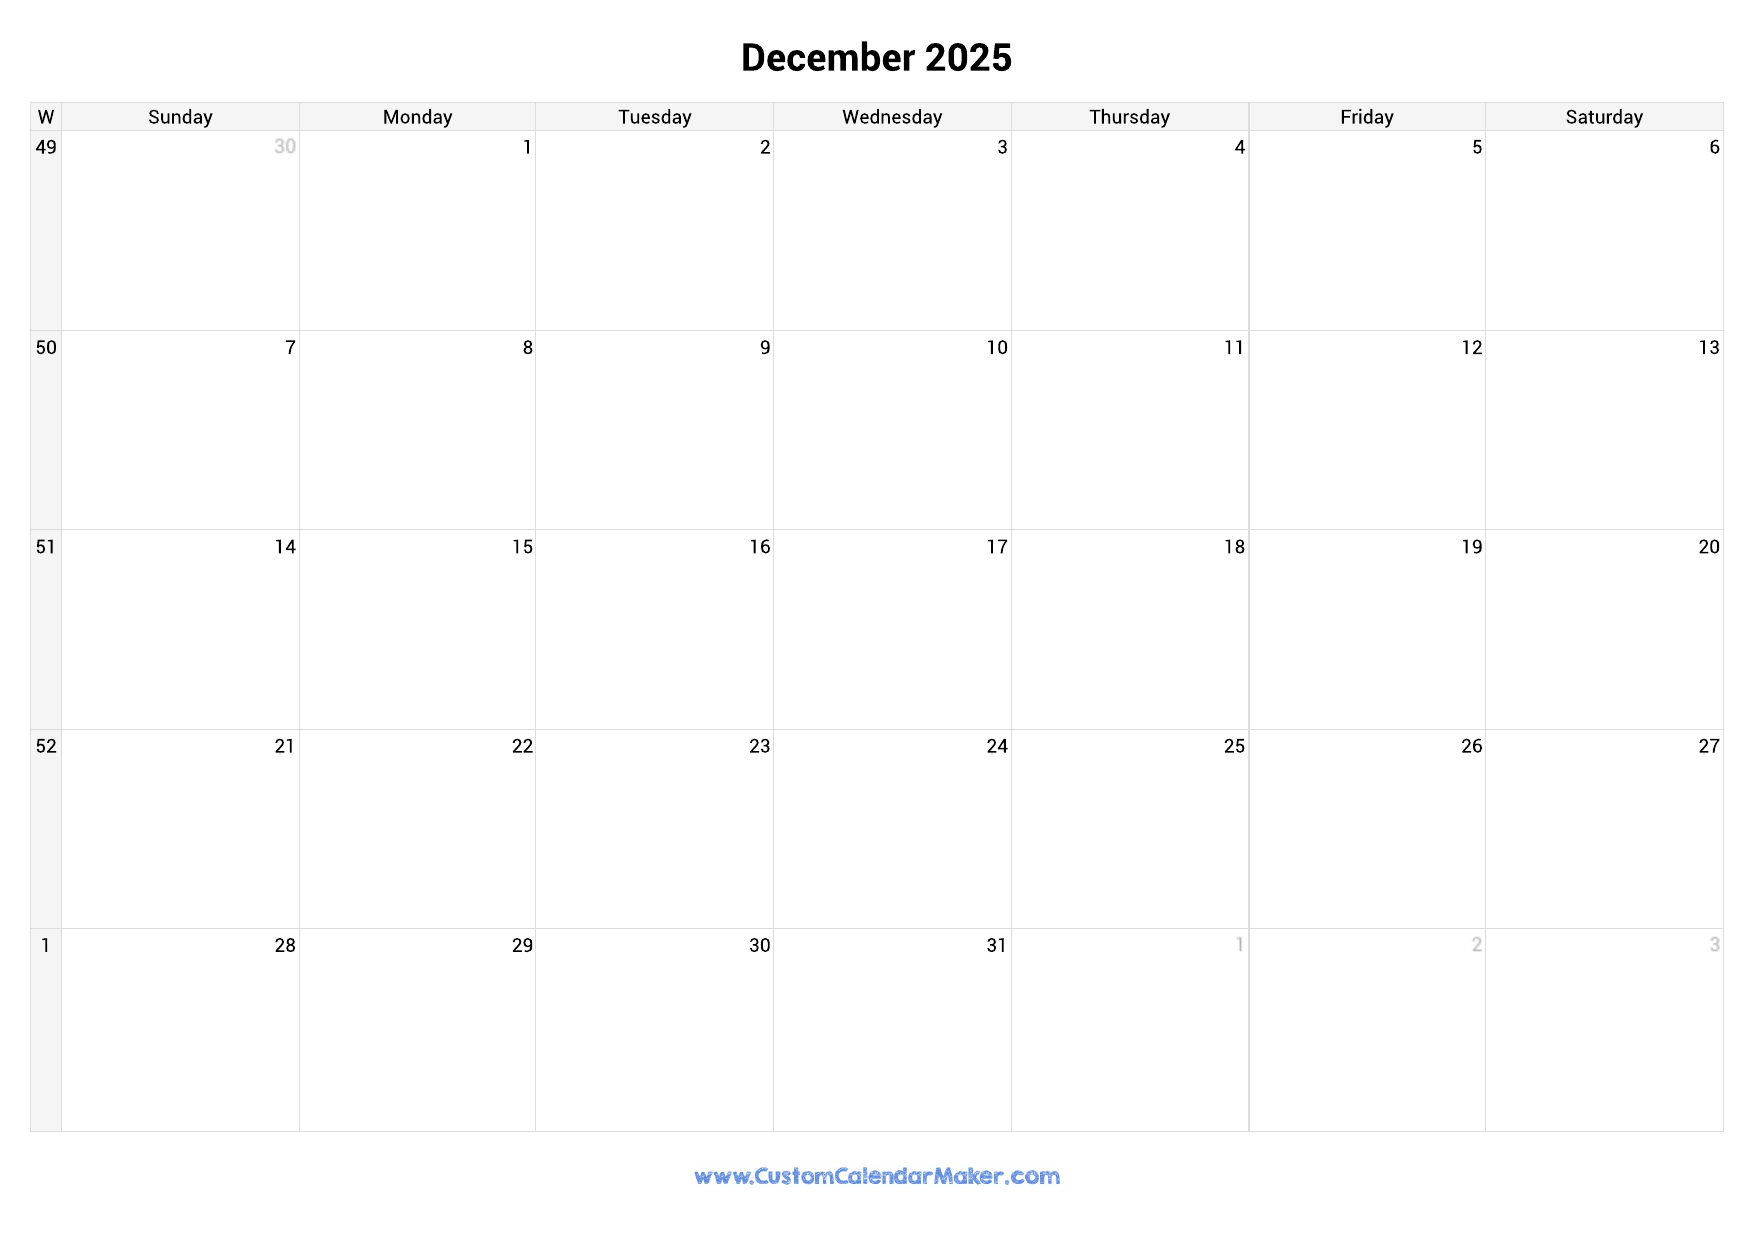 december-2025-calanders